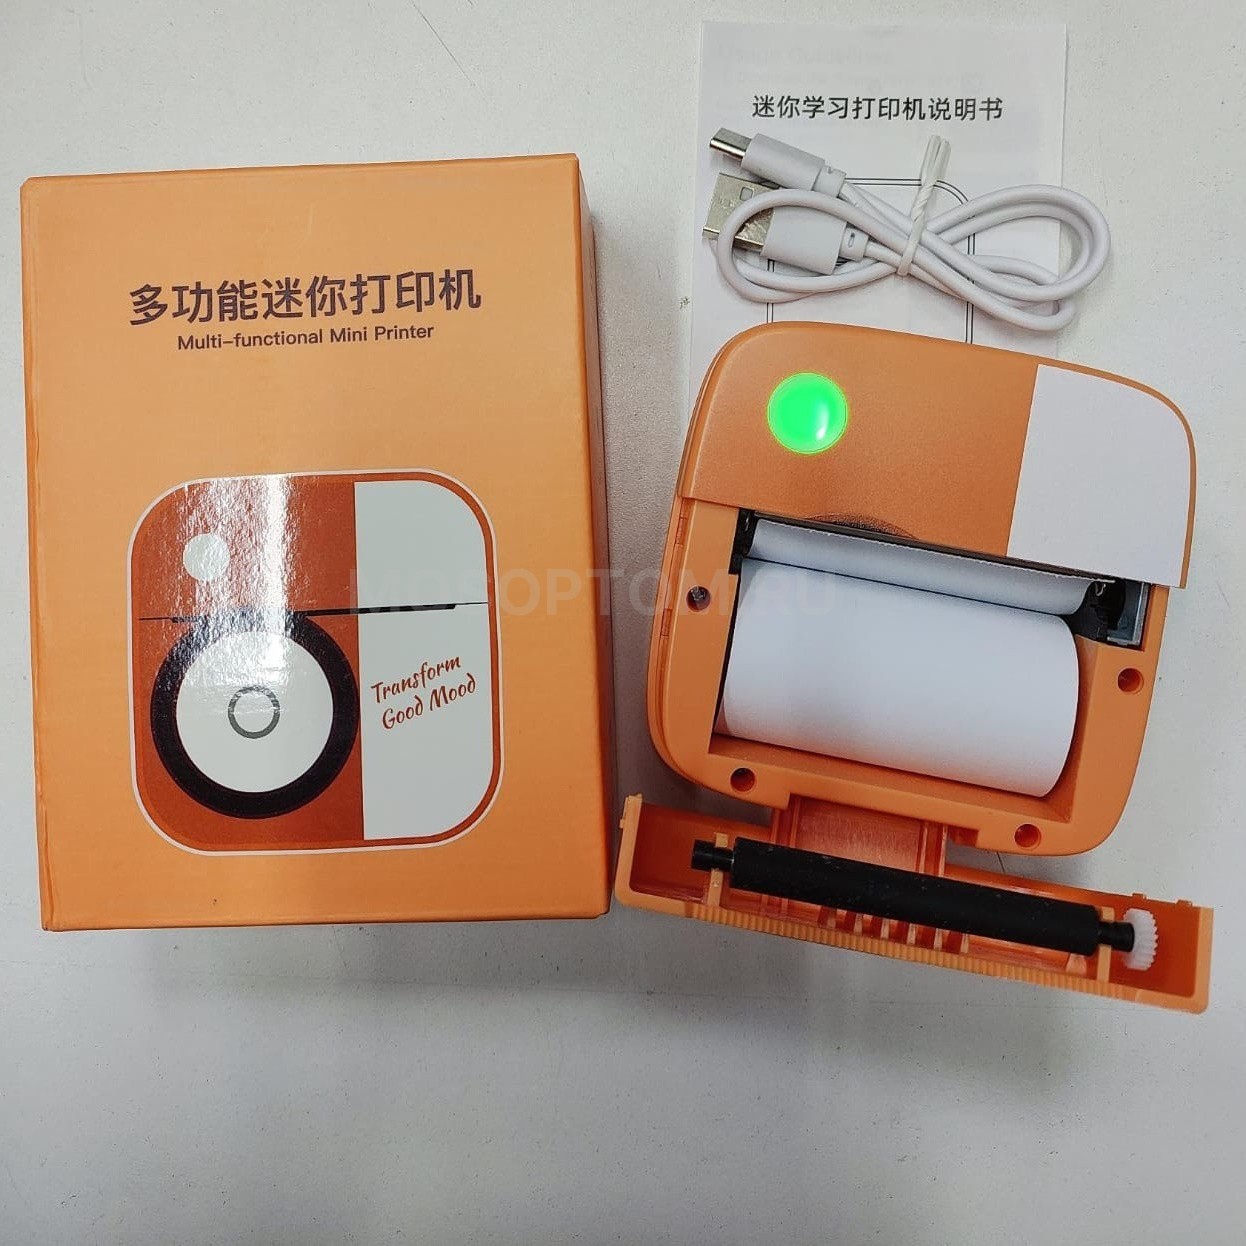 Портативный термопринтер Multi-functional Portable Mini Printer оптом